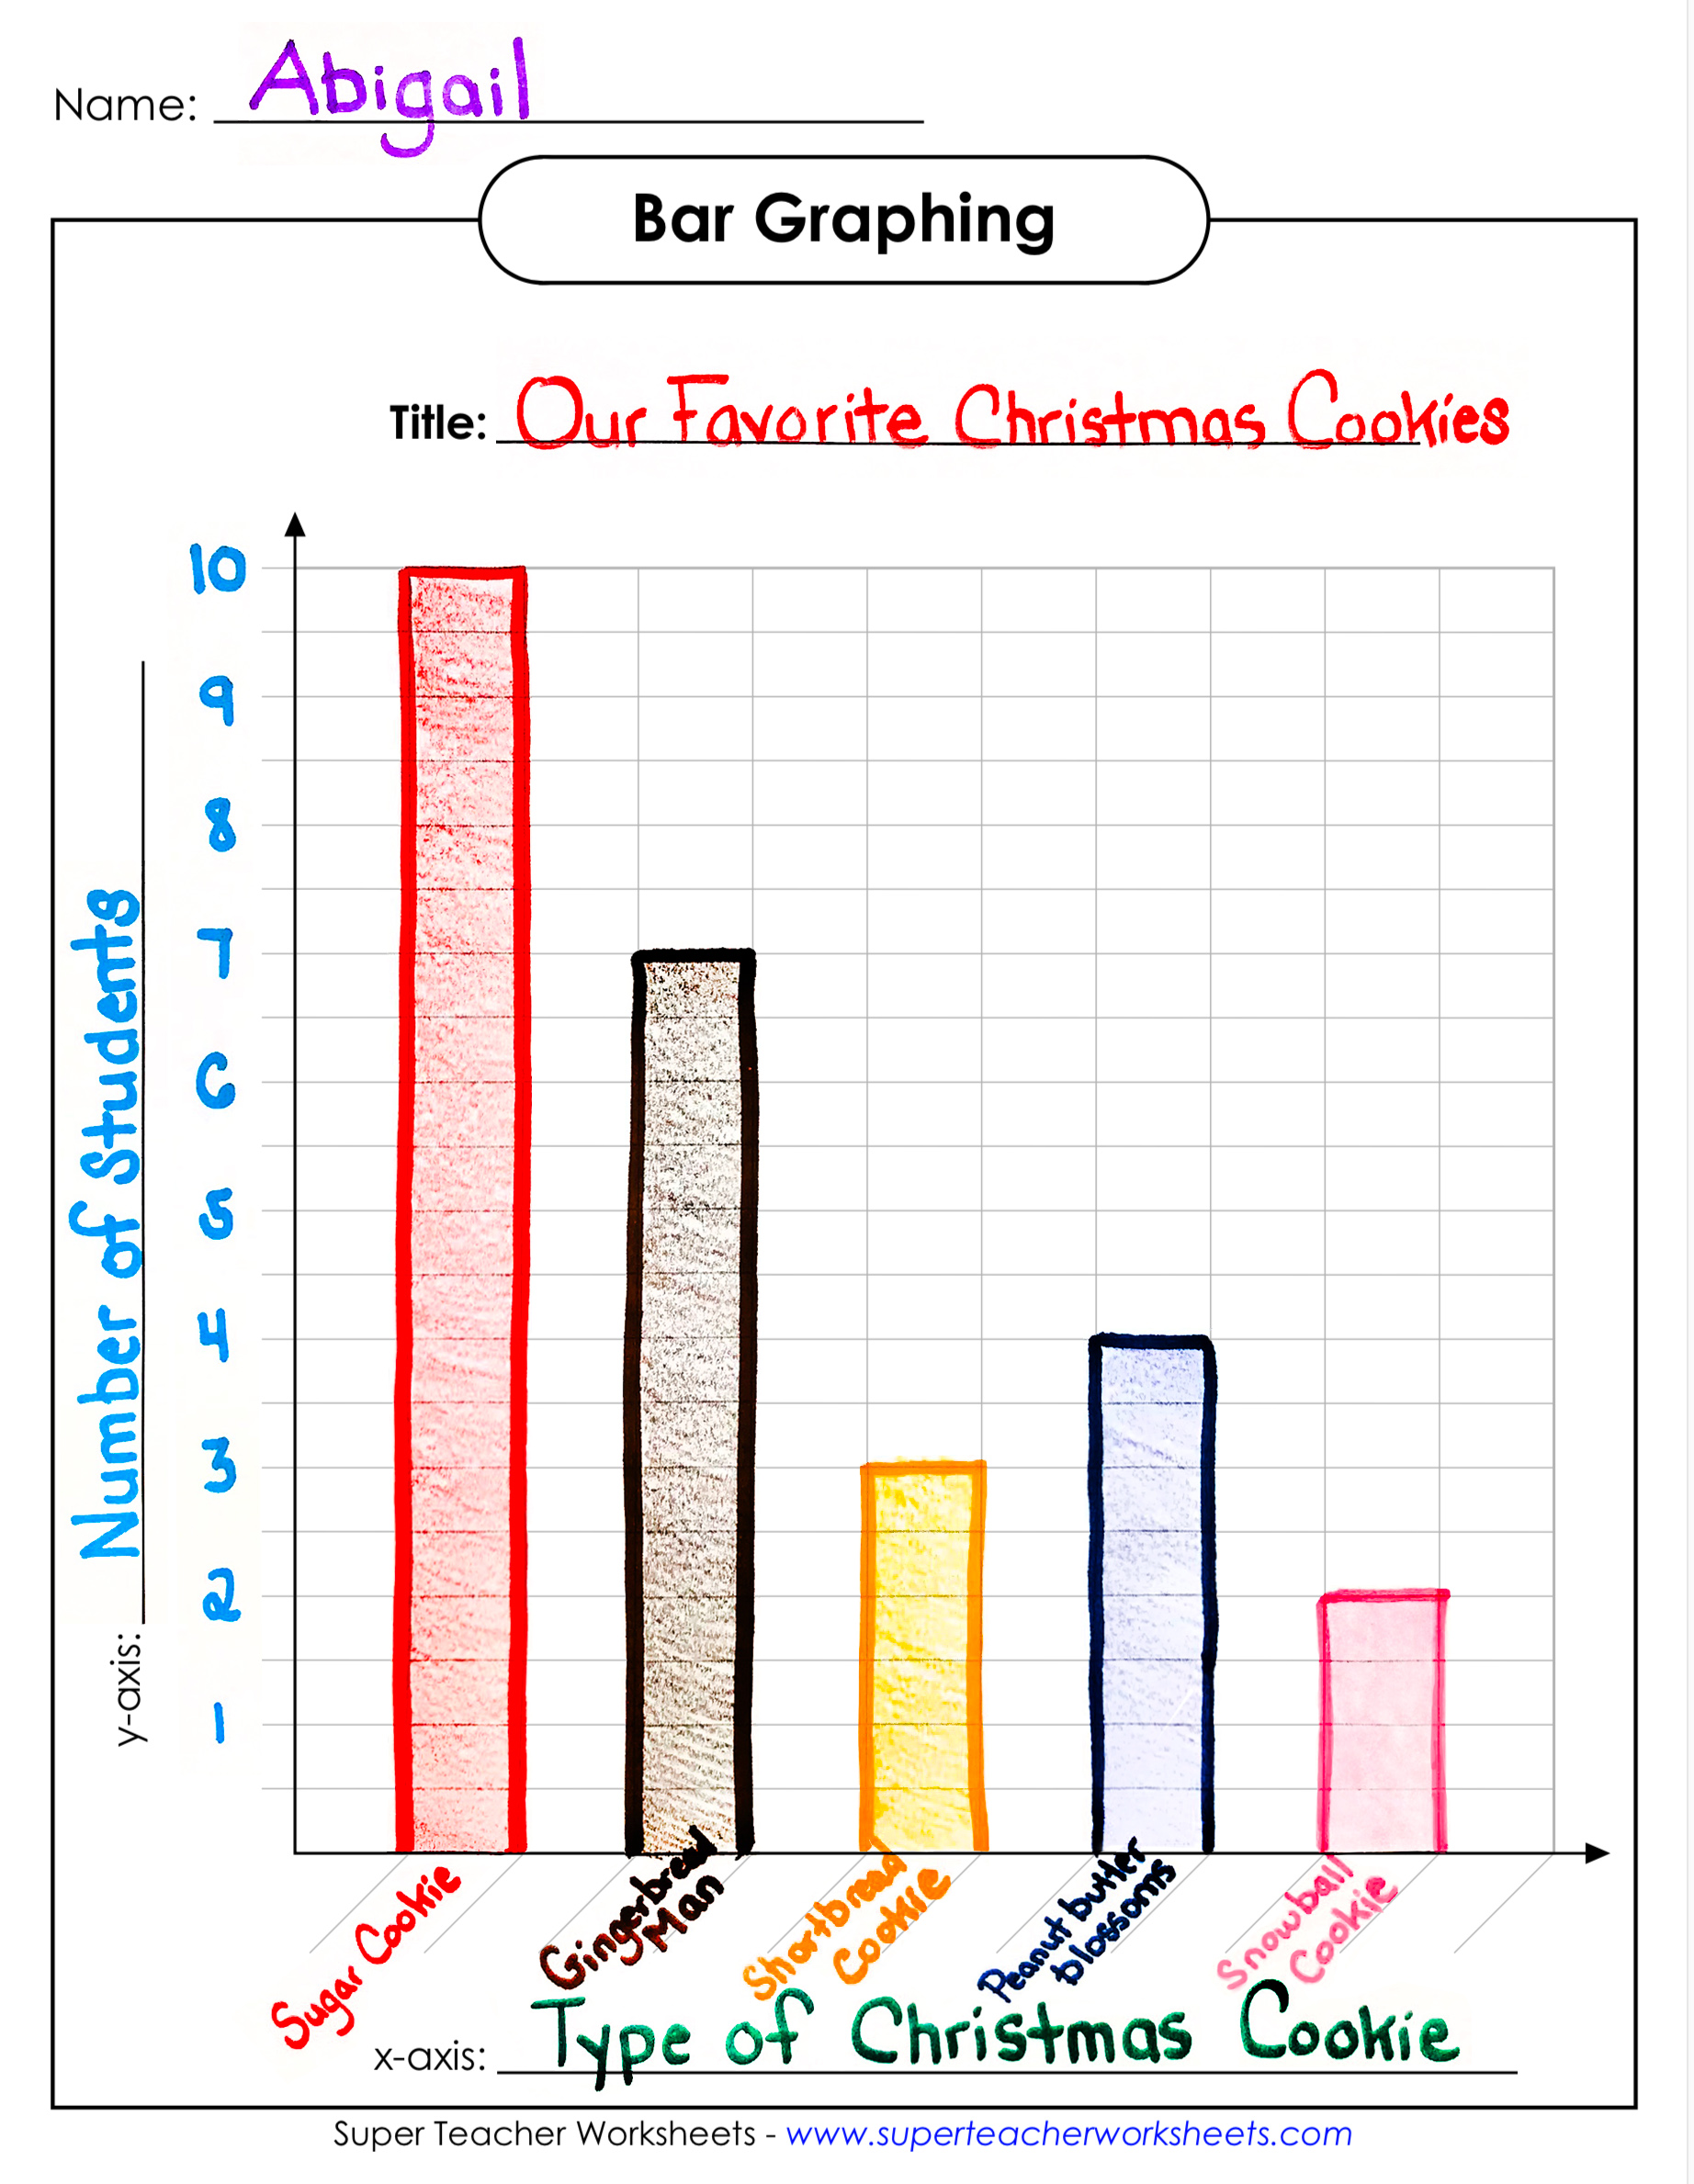 christmas-cookie-bar-graph.jpg